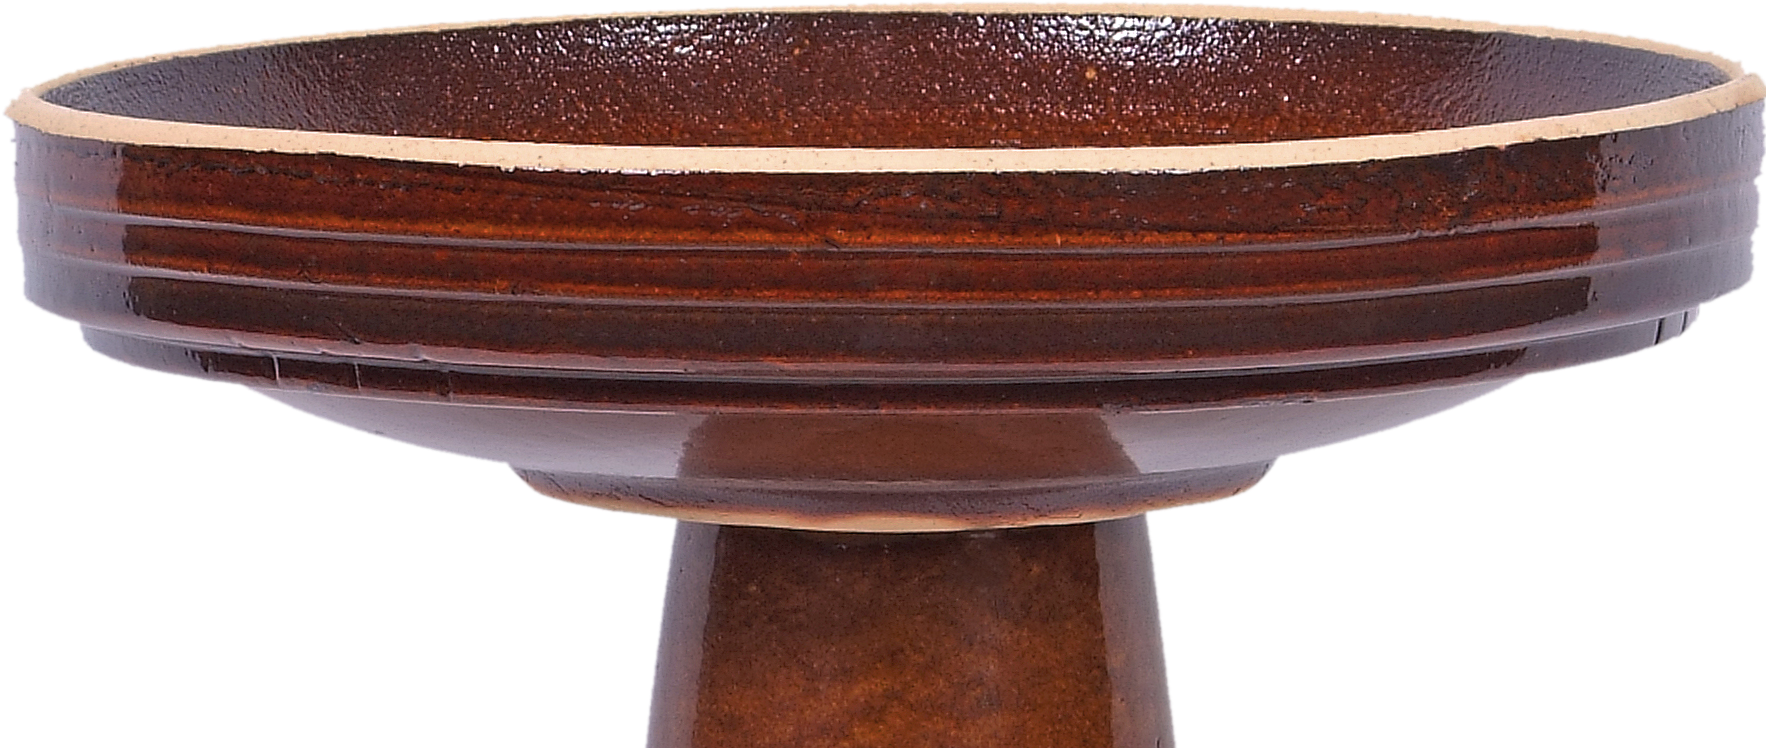 locking ceramic birdbath top in orange brown glaze